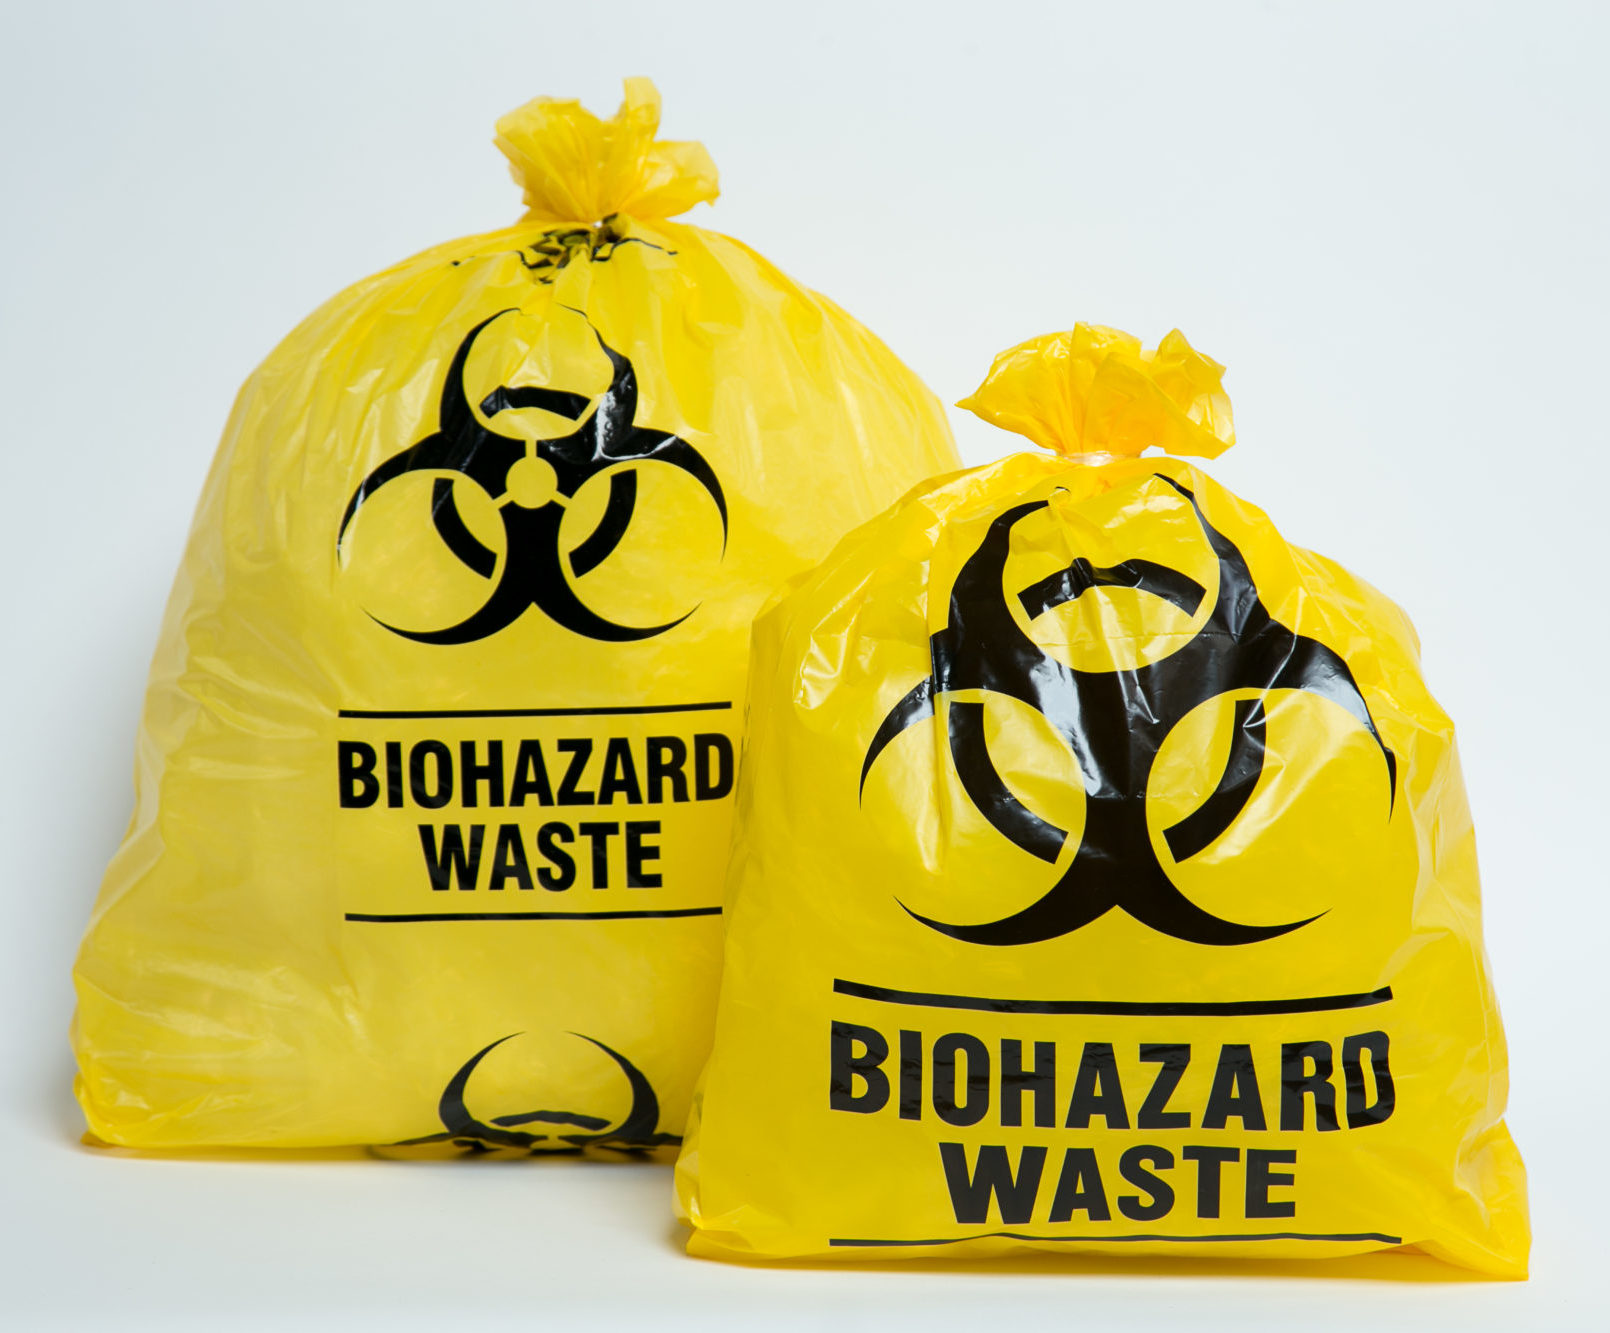  Yellow Biohazard Waste Bags